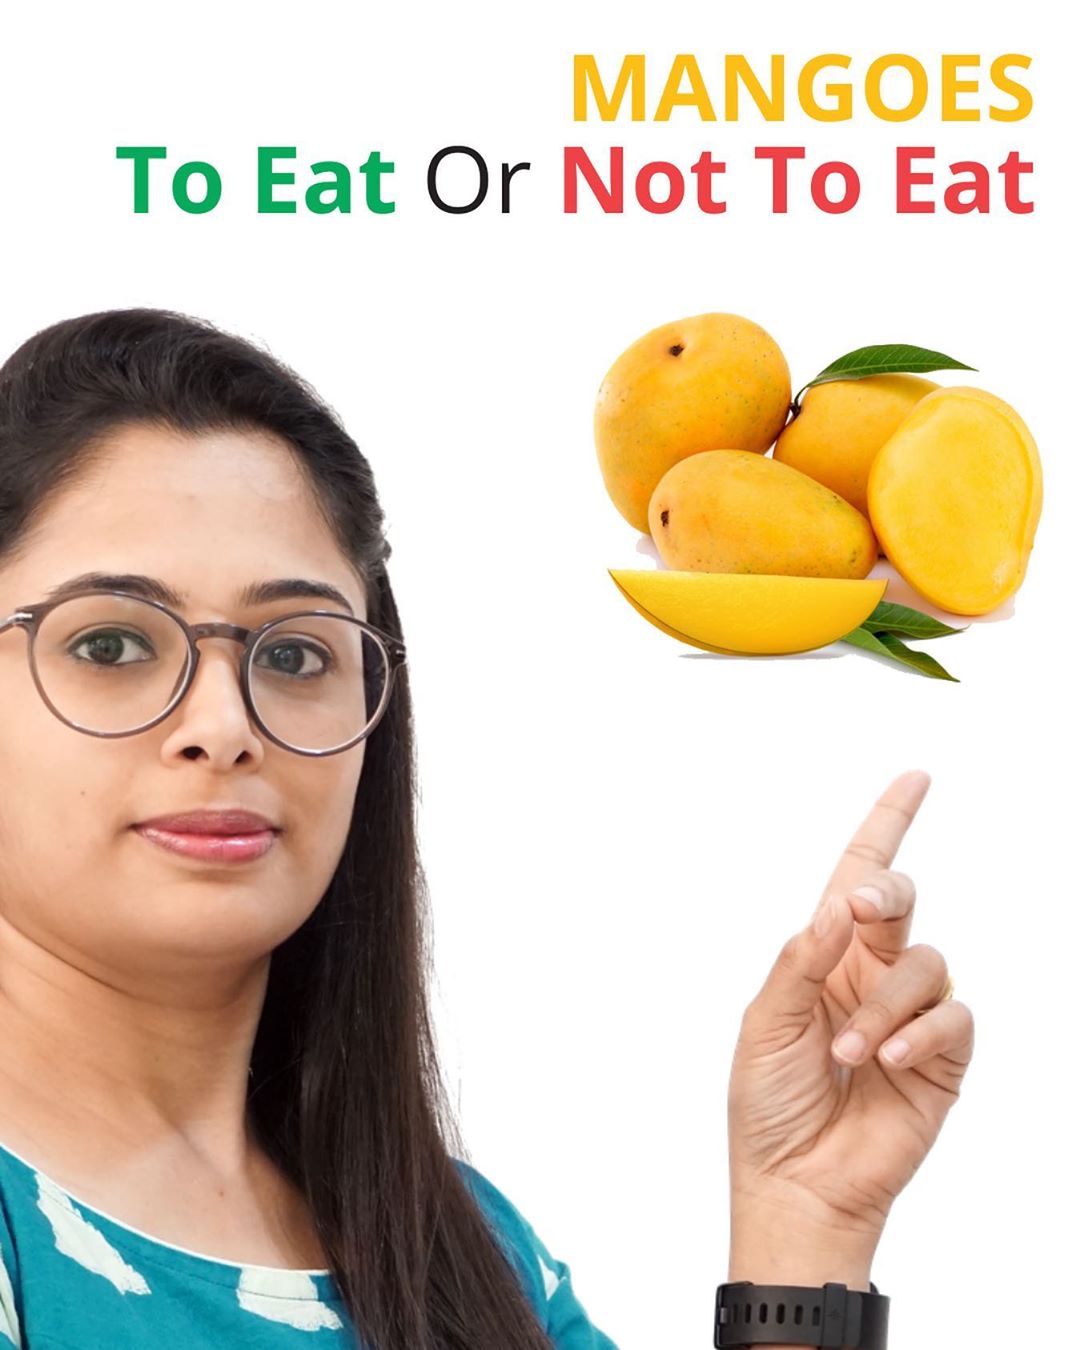 Komal Patel,  mangoes, healthy, seasonalfruit, nutrition, youtube, komalpatel